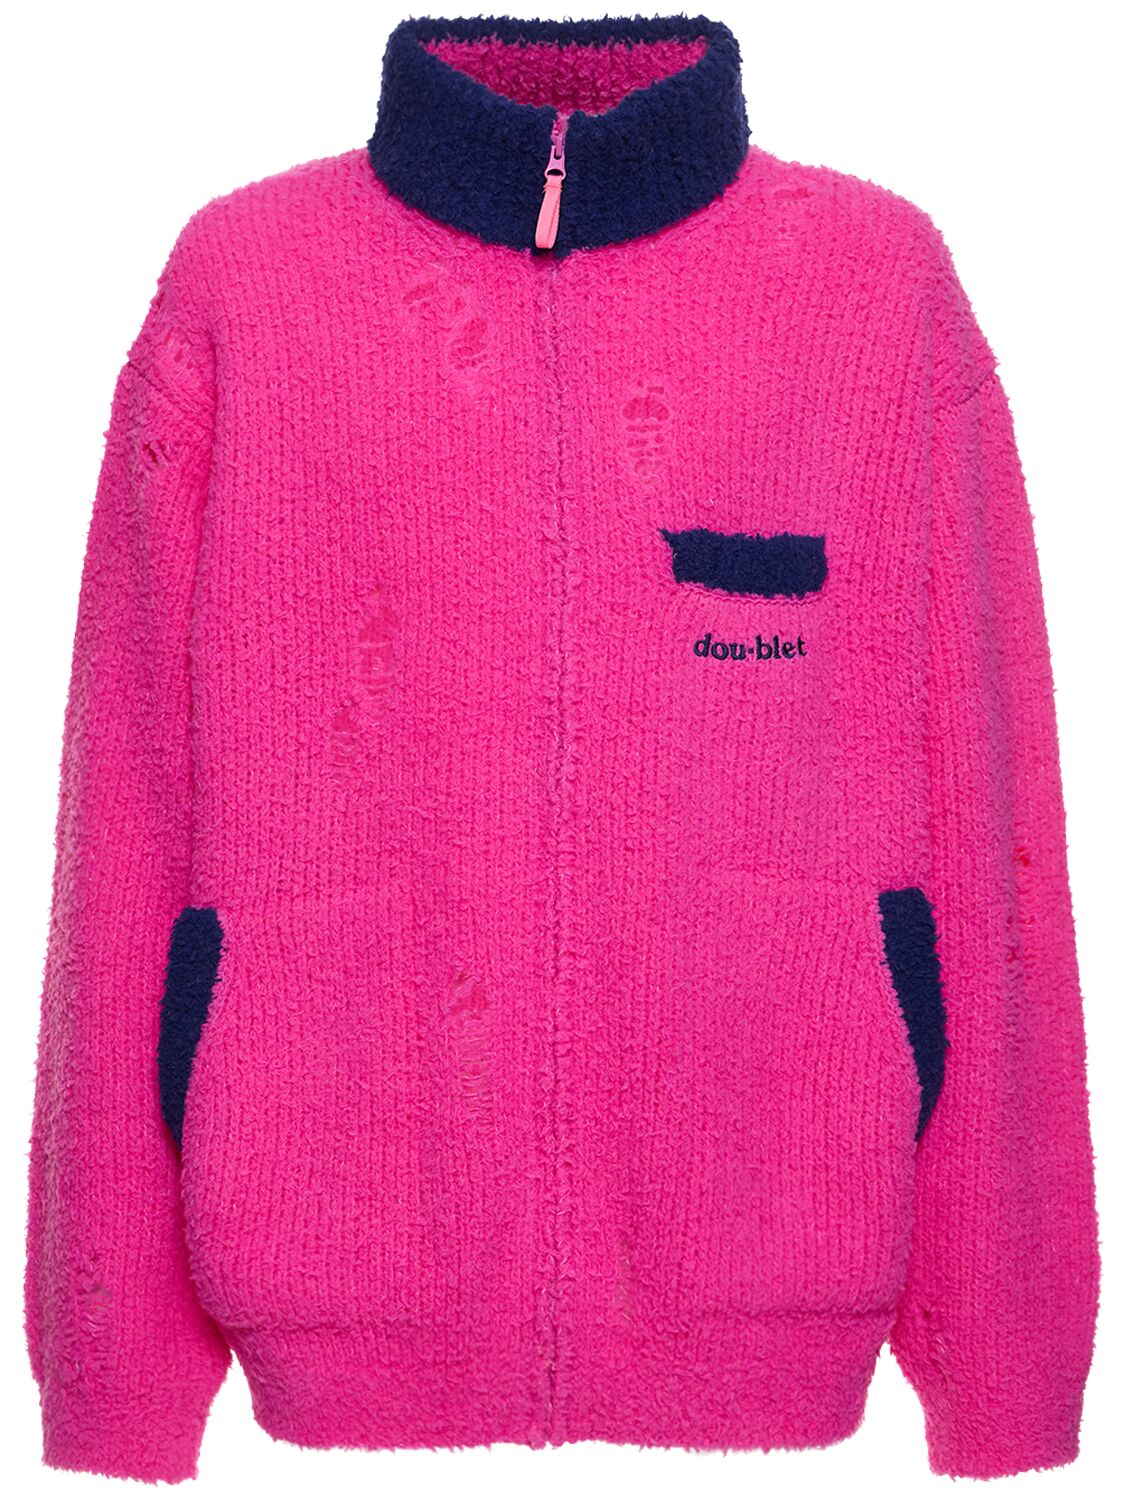 Image of Wool Blend Knit Jacket